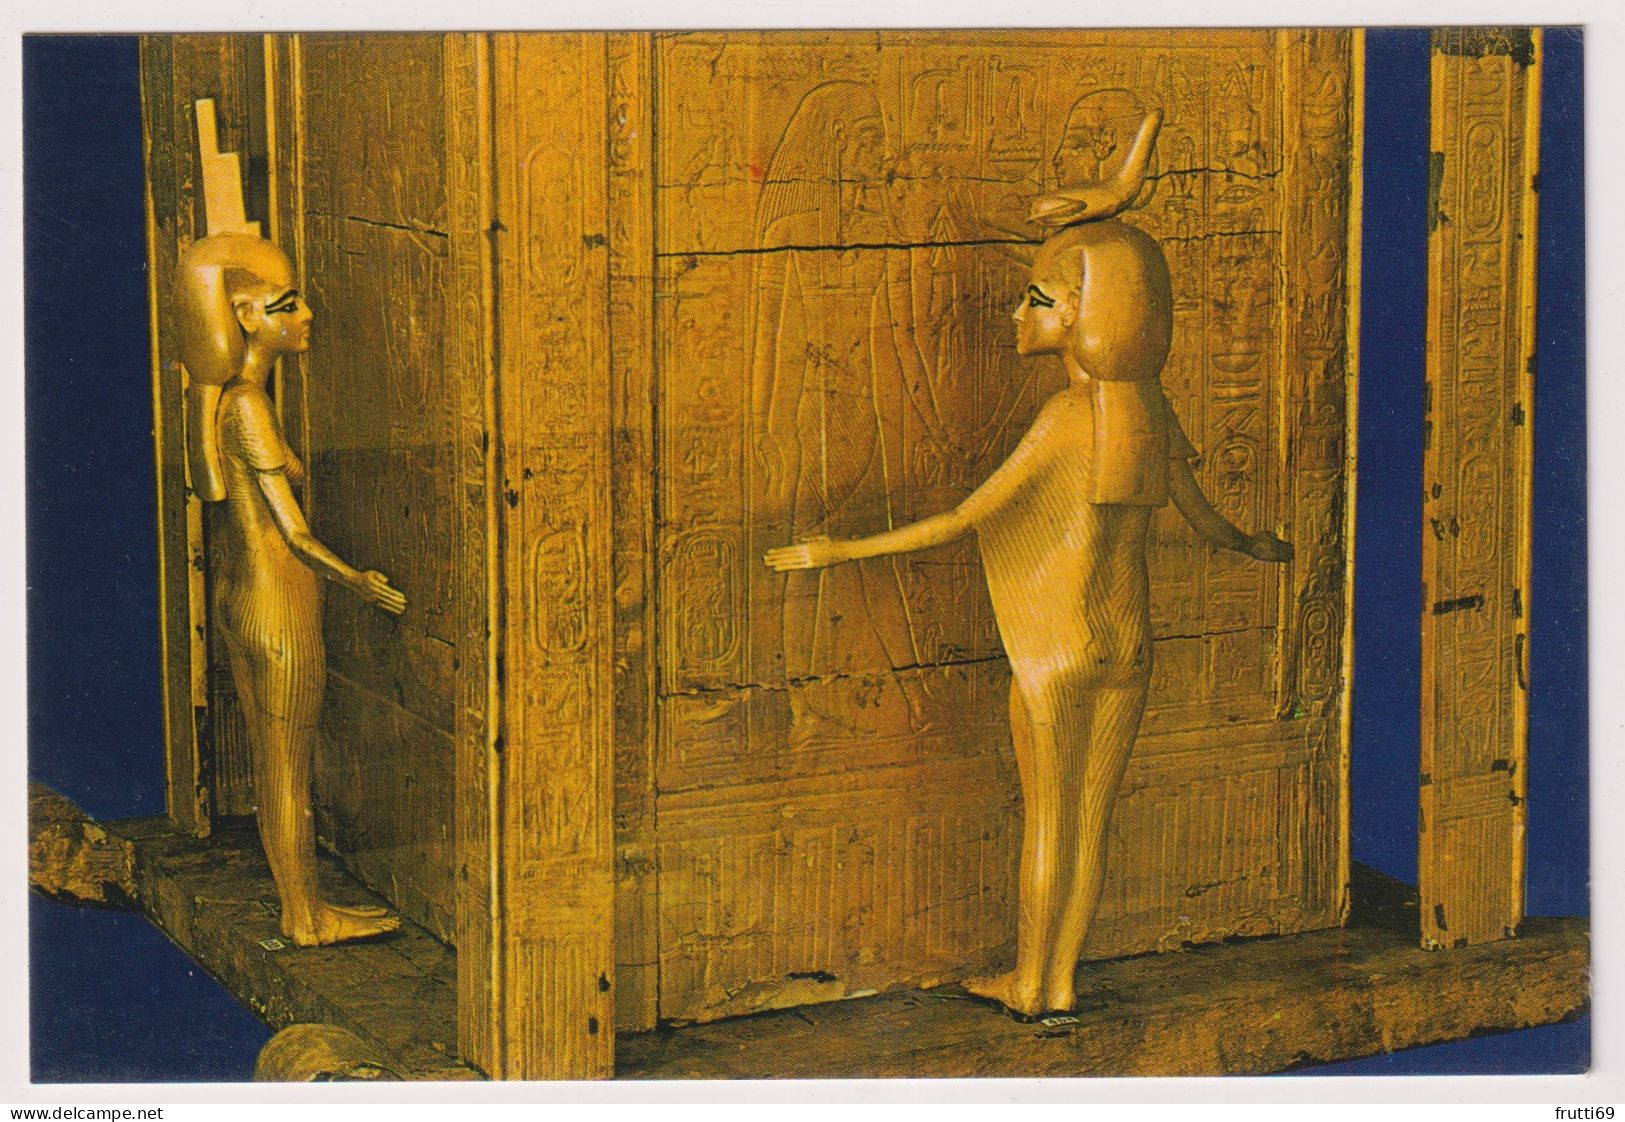 AK 198270 EGYPT -   Cairo - The Egyptian Museum - Tutankhamen's Treasures - Large Gold Canopie Chest - Museos